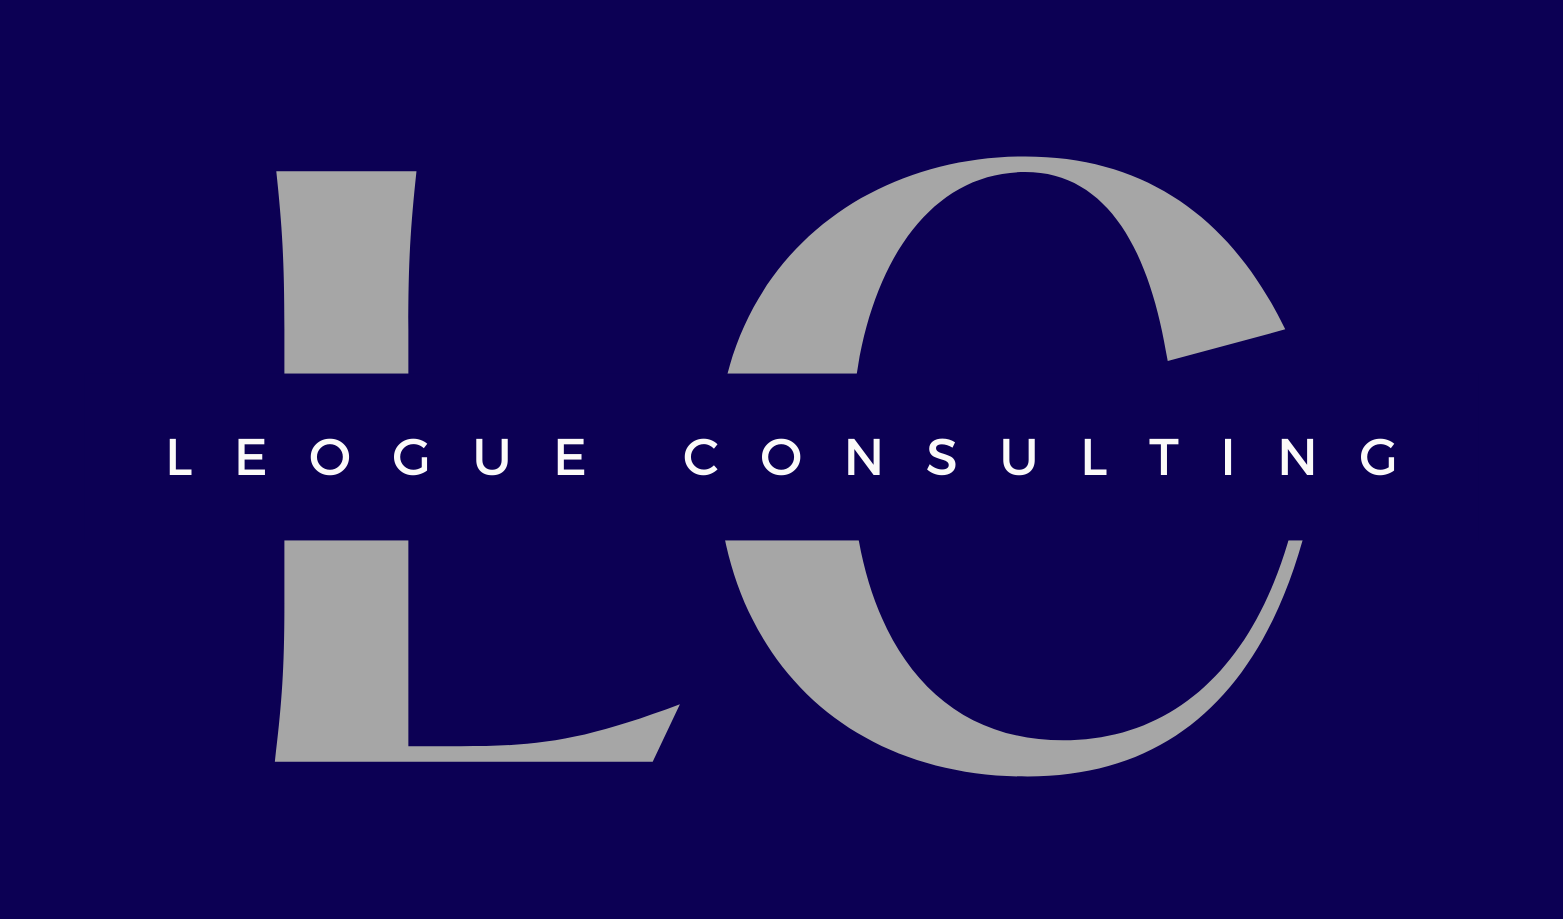 Leogue Consulting